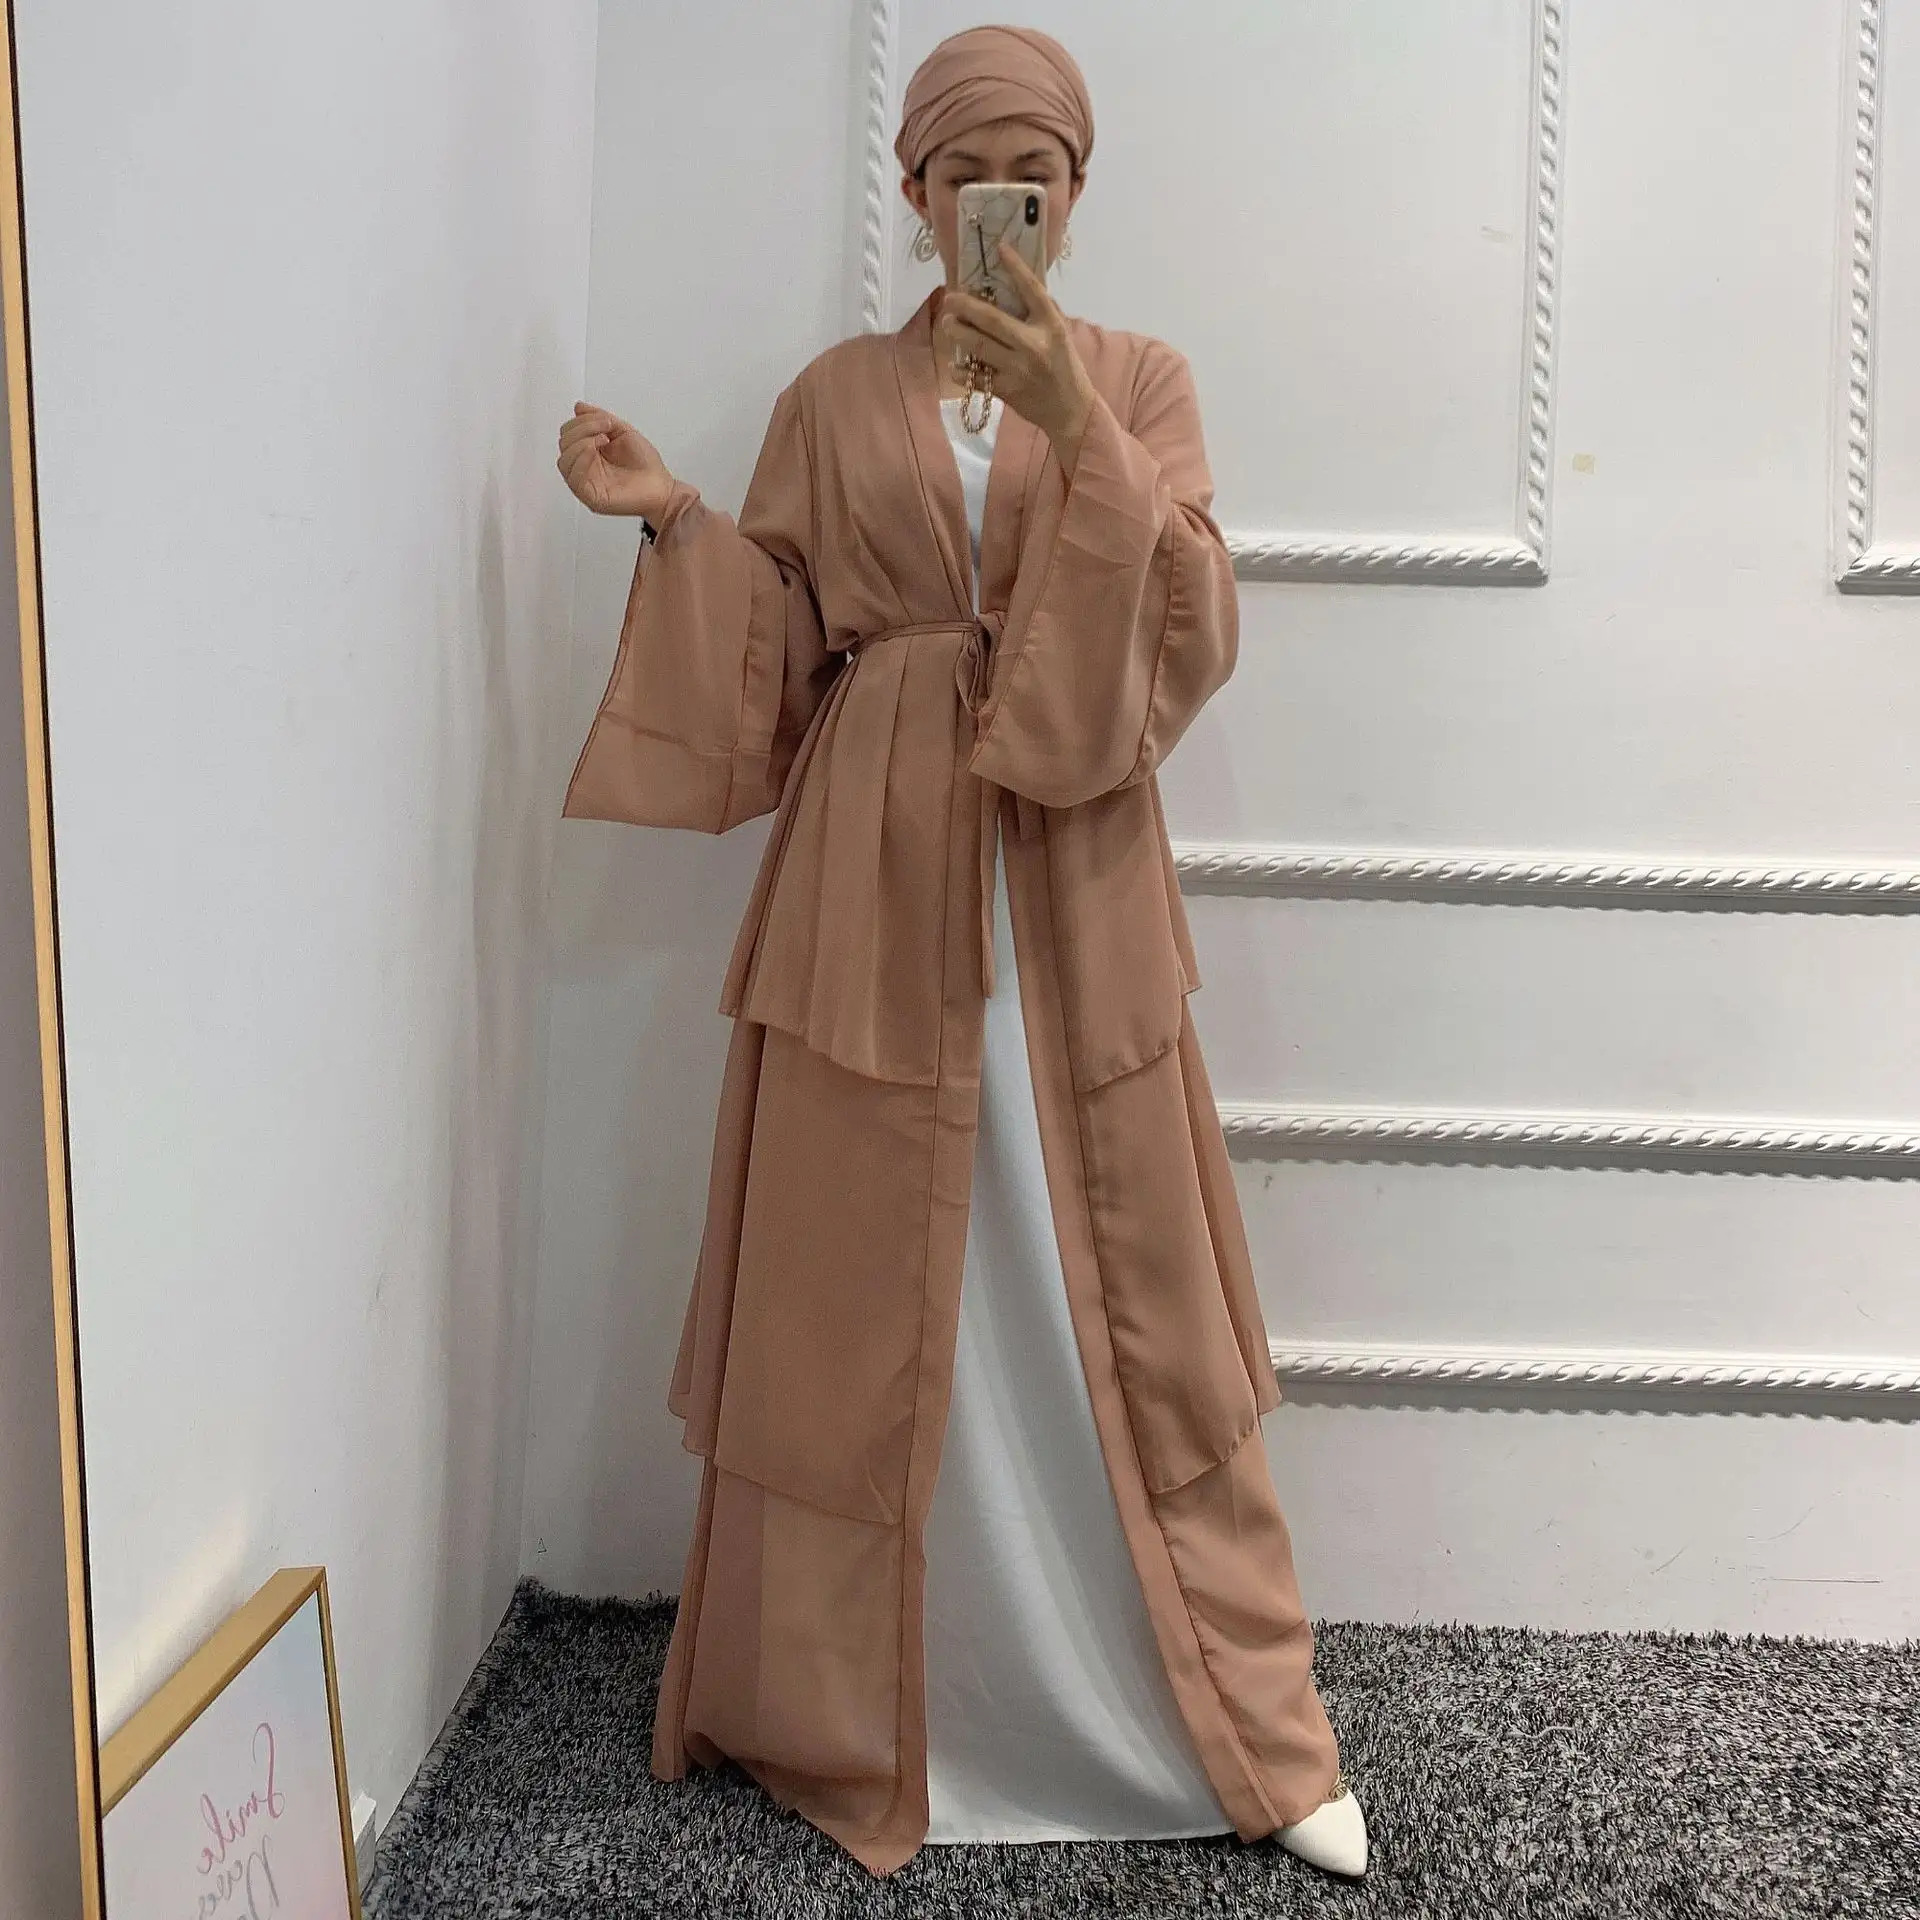 Islamic Clothing 3 Layers Simple Chiffon Front Open Muslim Kaftan Abaya Elegant Long Sleeve